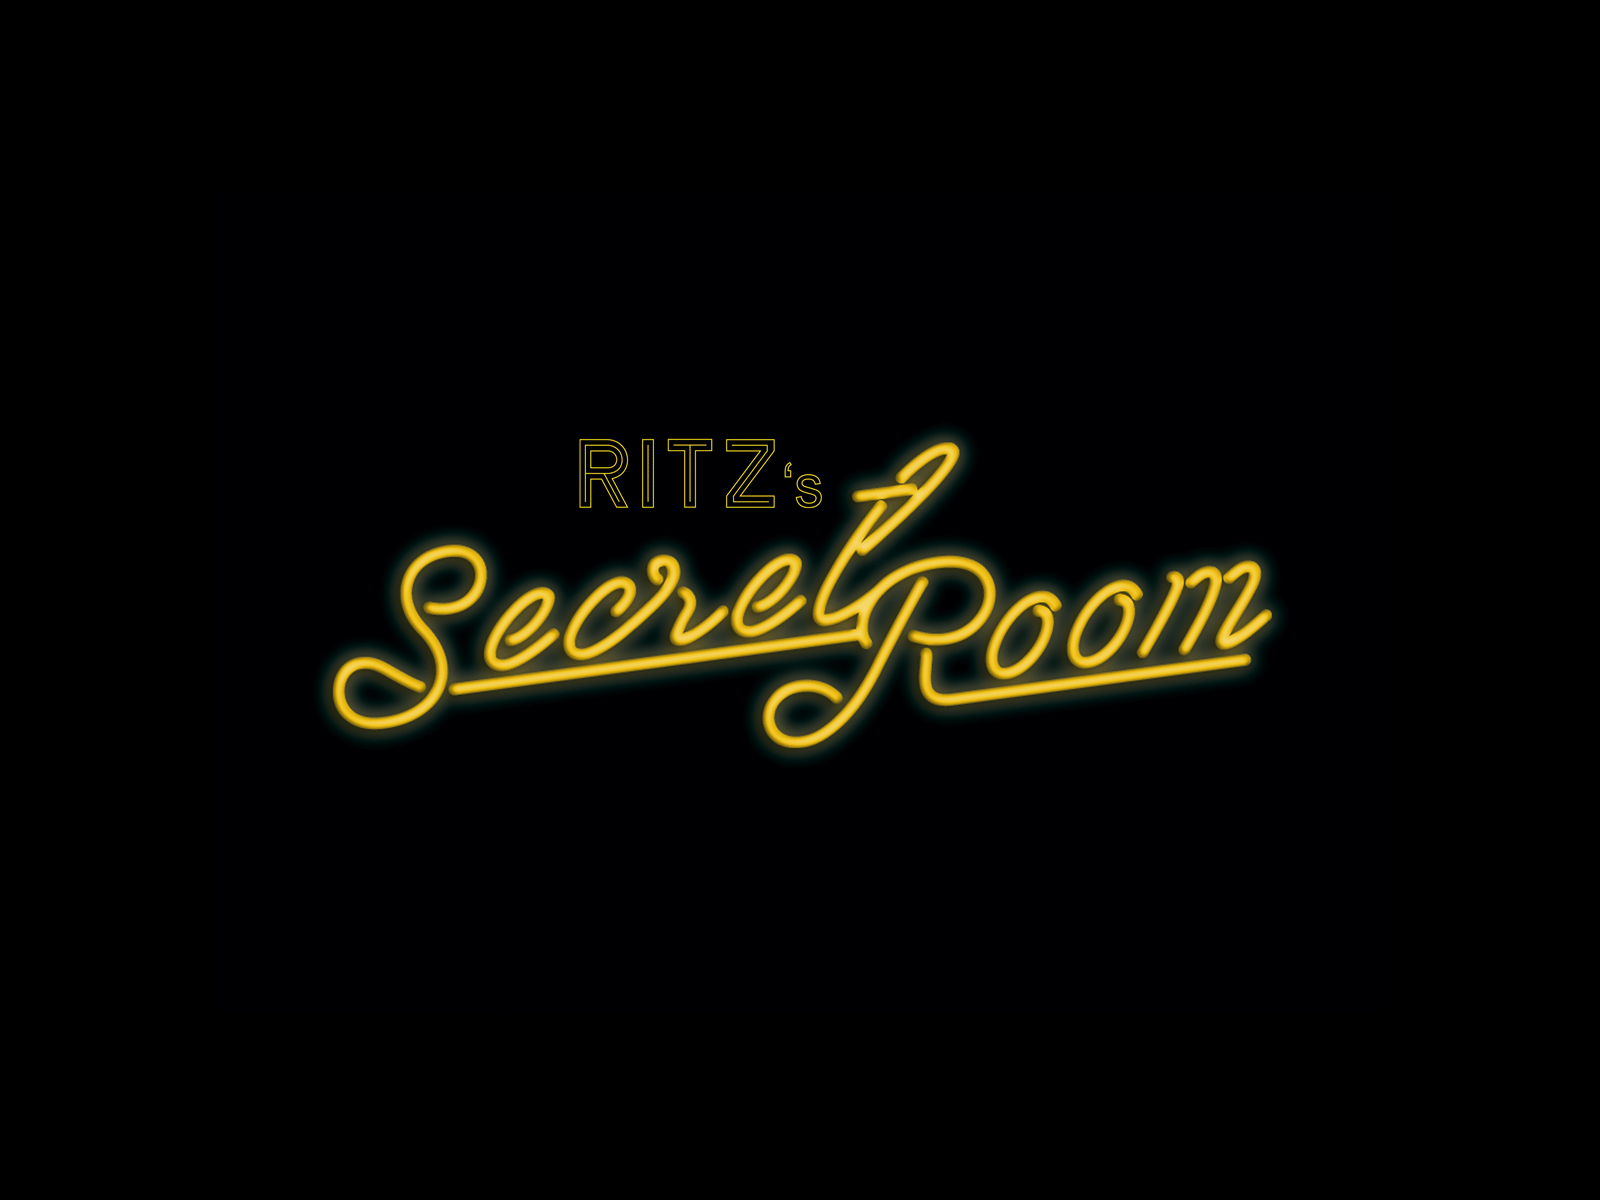 RITZ's Secret Room design logo typography